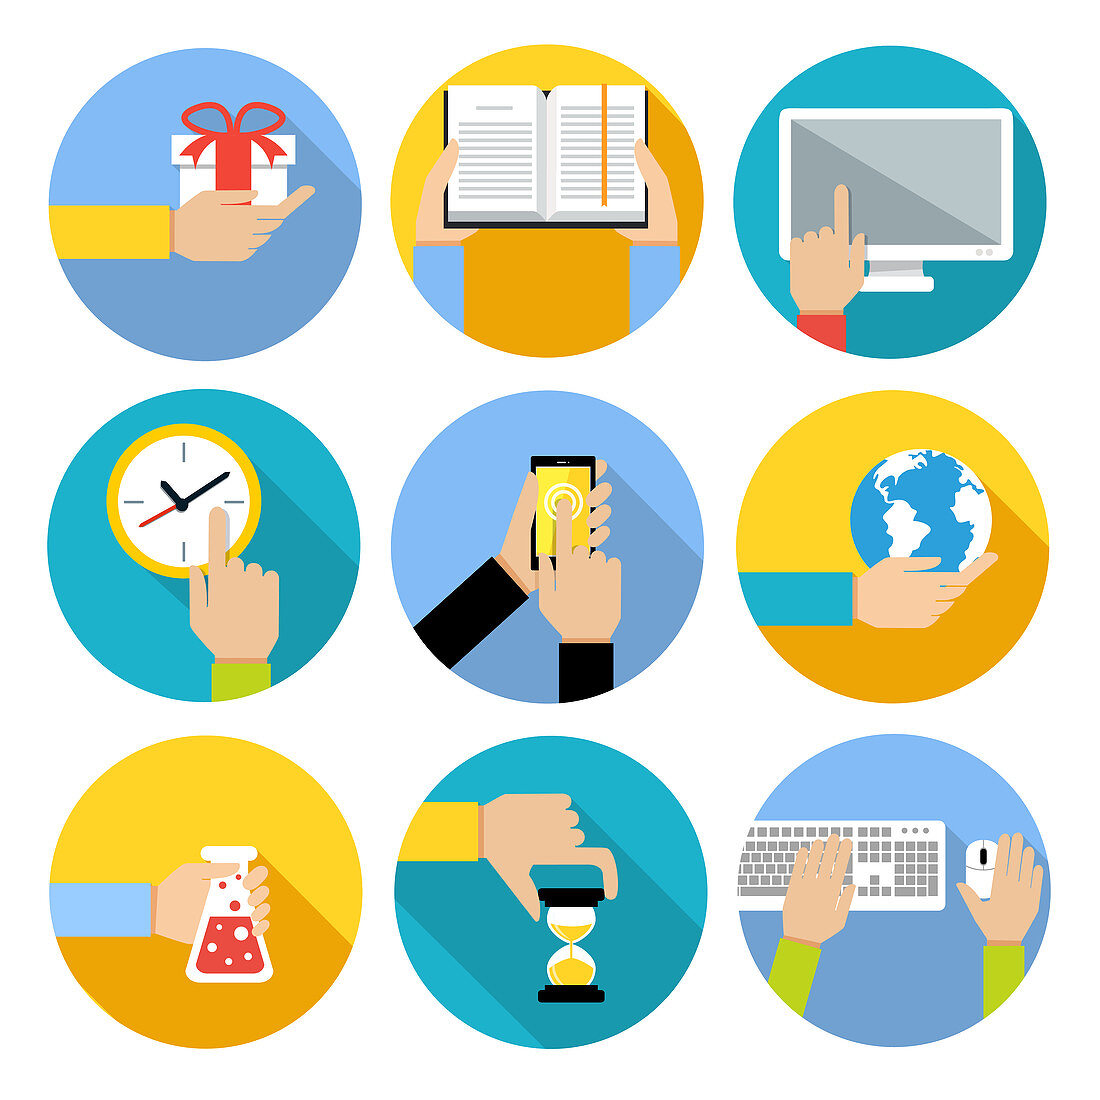 Activities icons, illustration